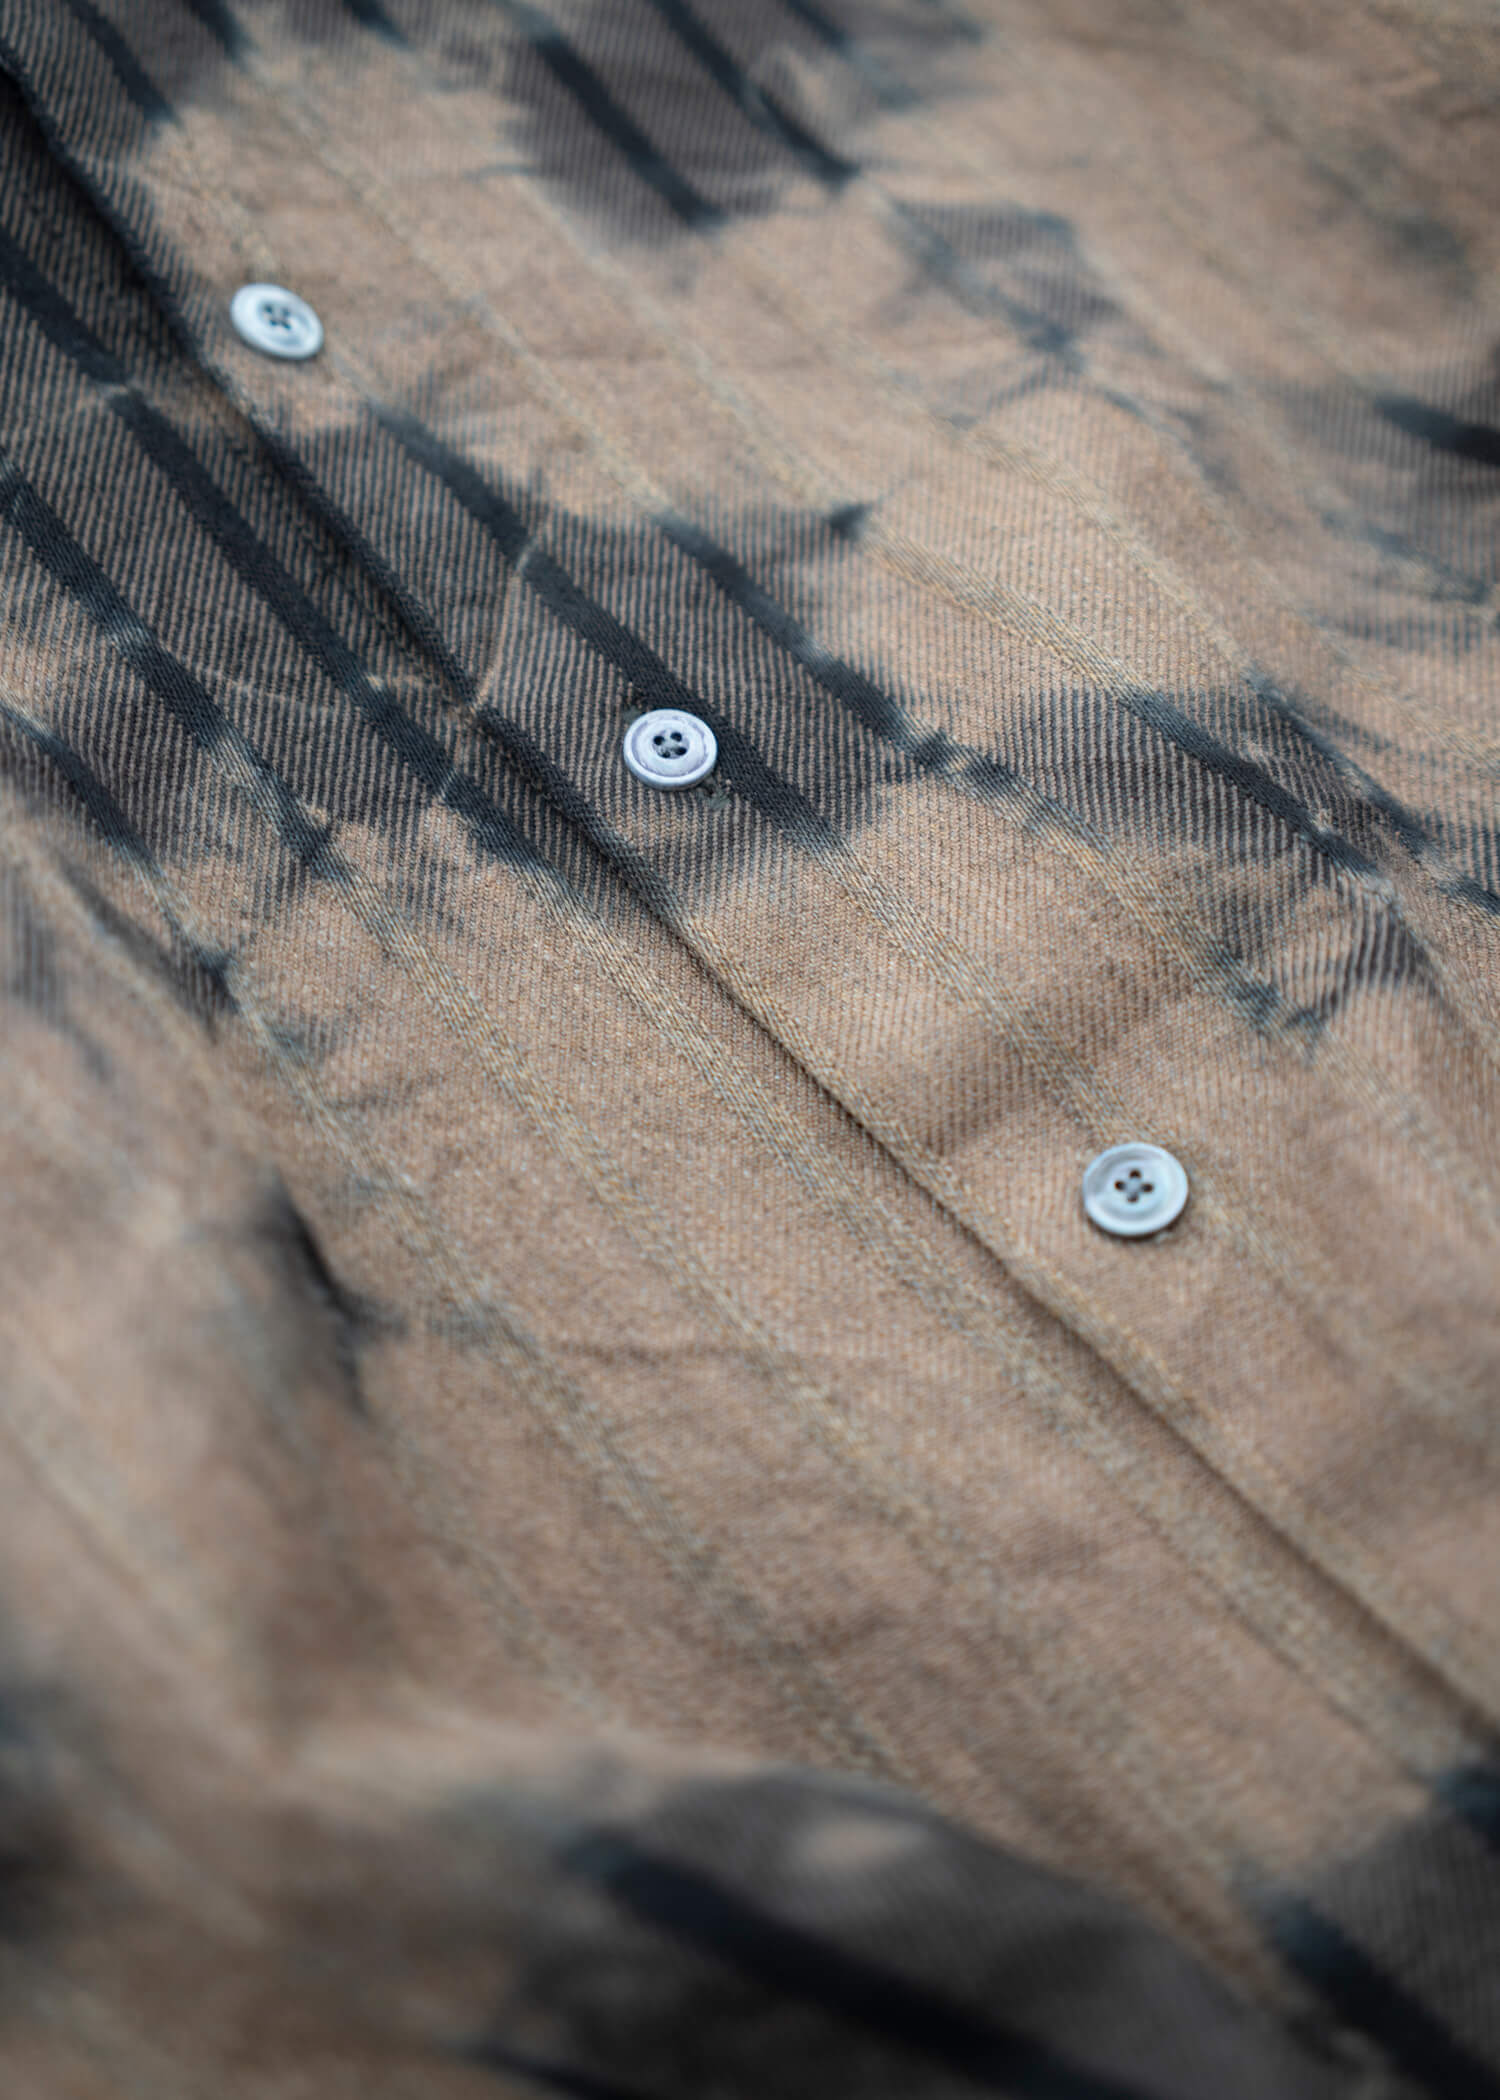 SUZUSAN Wool Cotton Dobby Stripe Shirt(Madara Shibori) Black - Camel